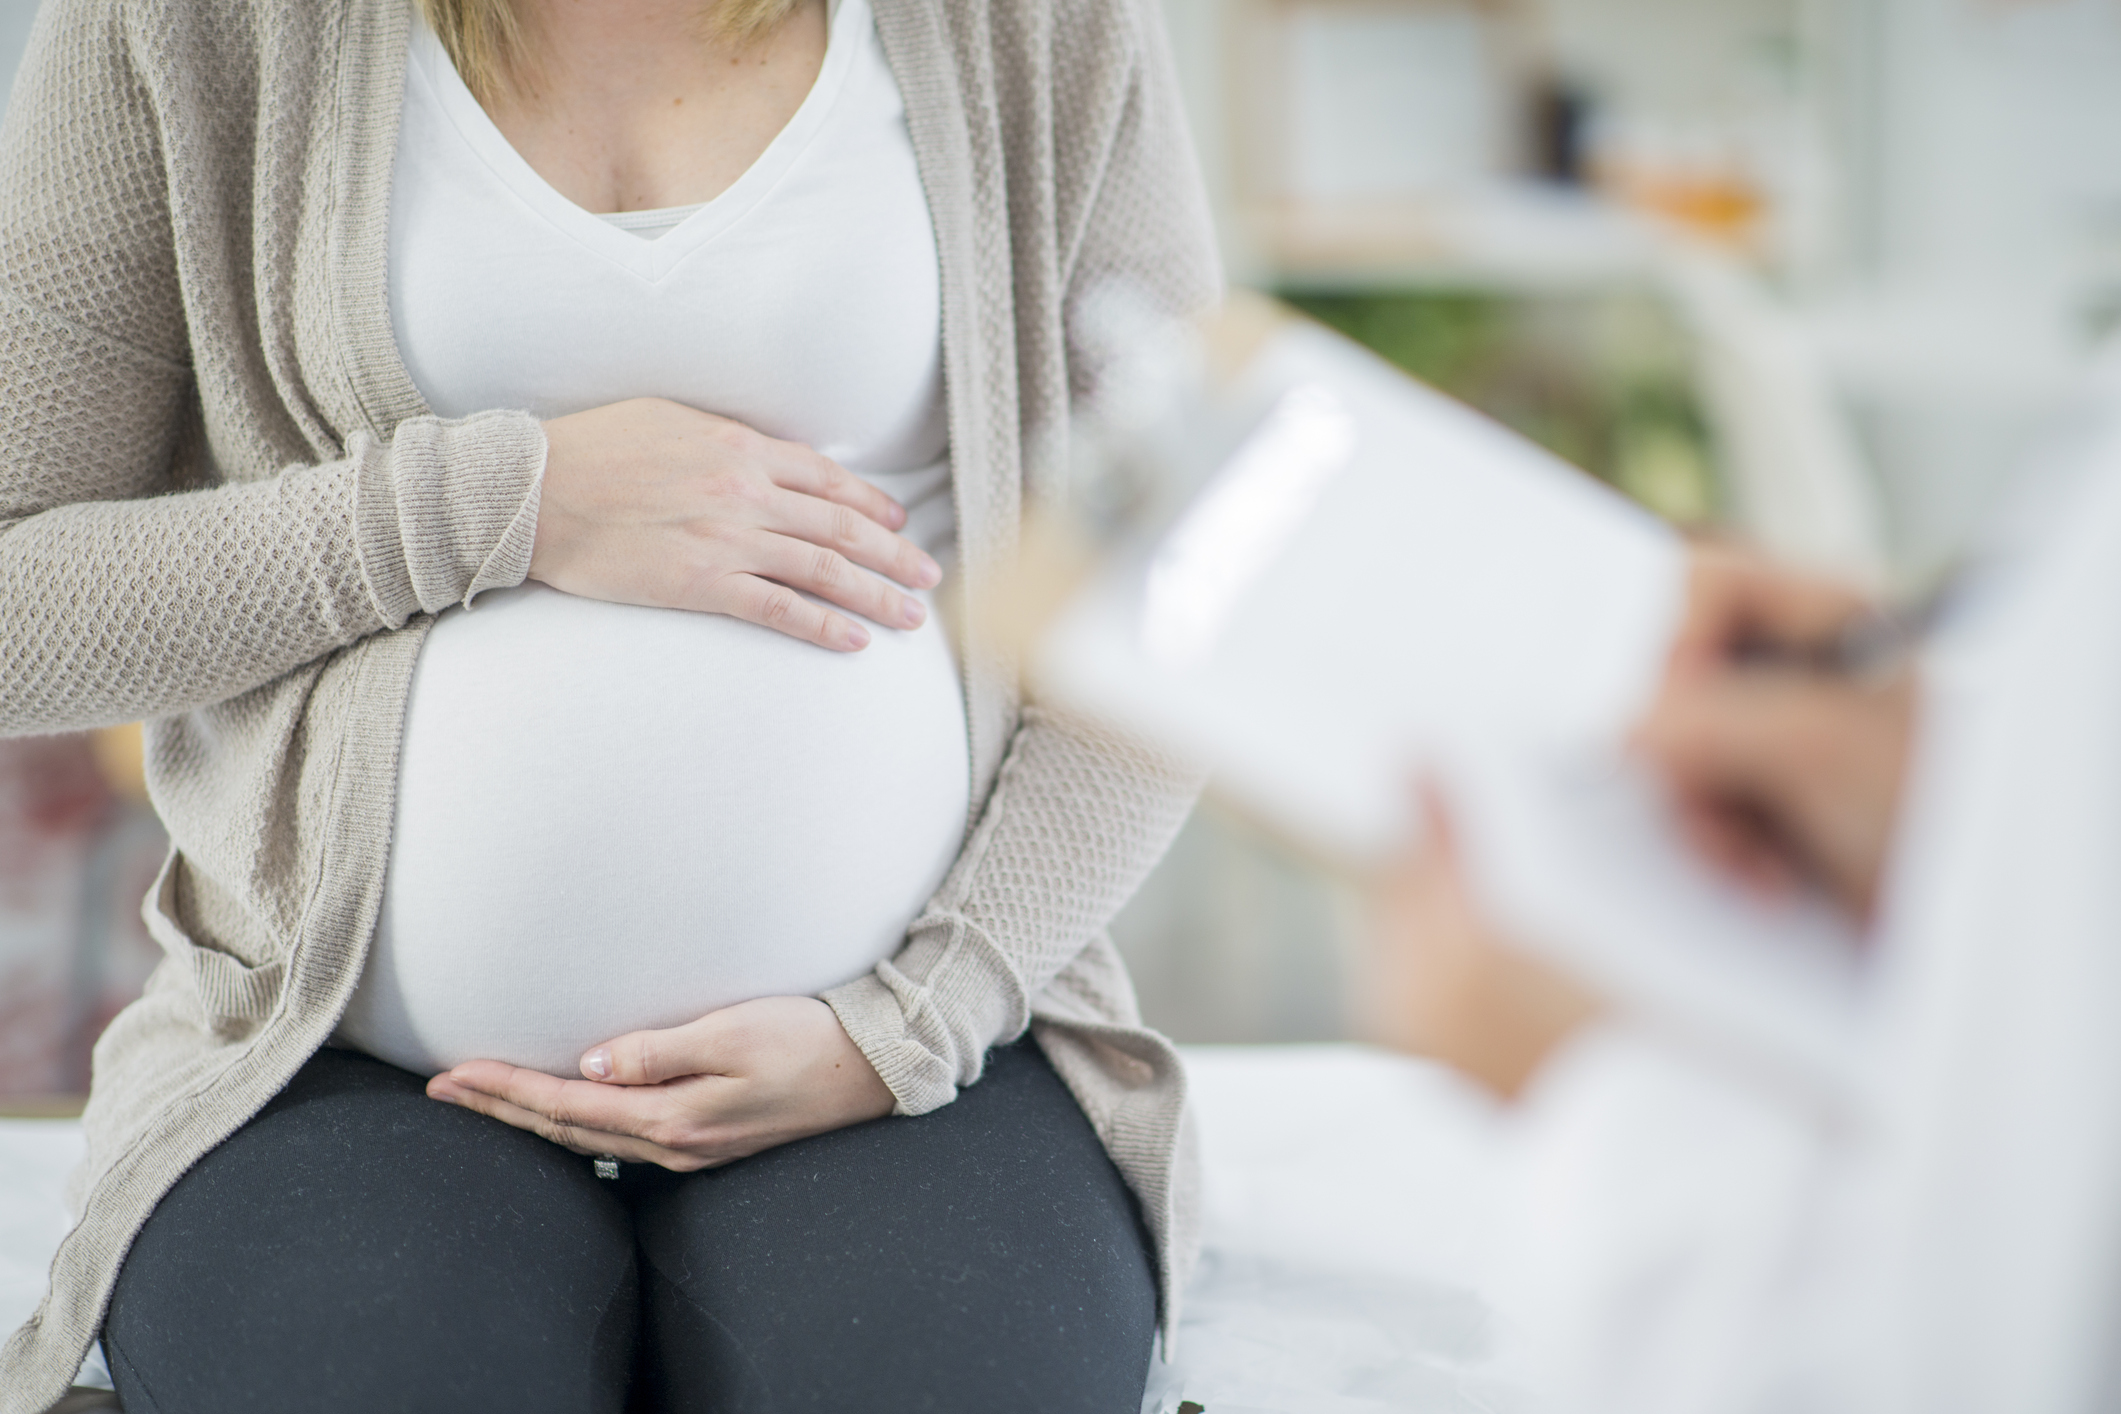 5-24-2018 Vast Majority of Poor Urban Women Dont Use Prenatal Vitamins Before Pregnancy Study Shows